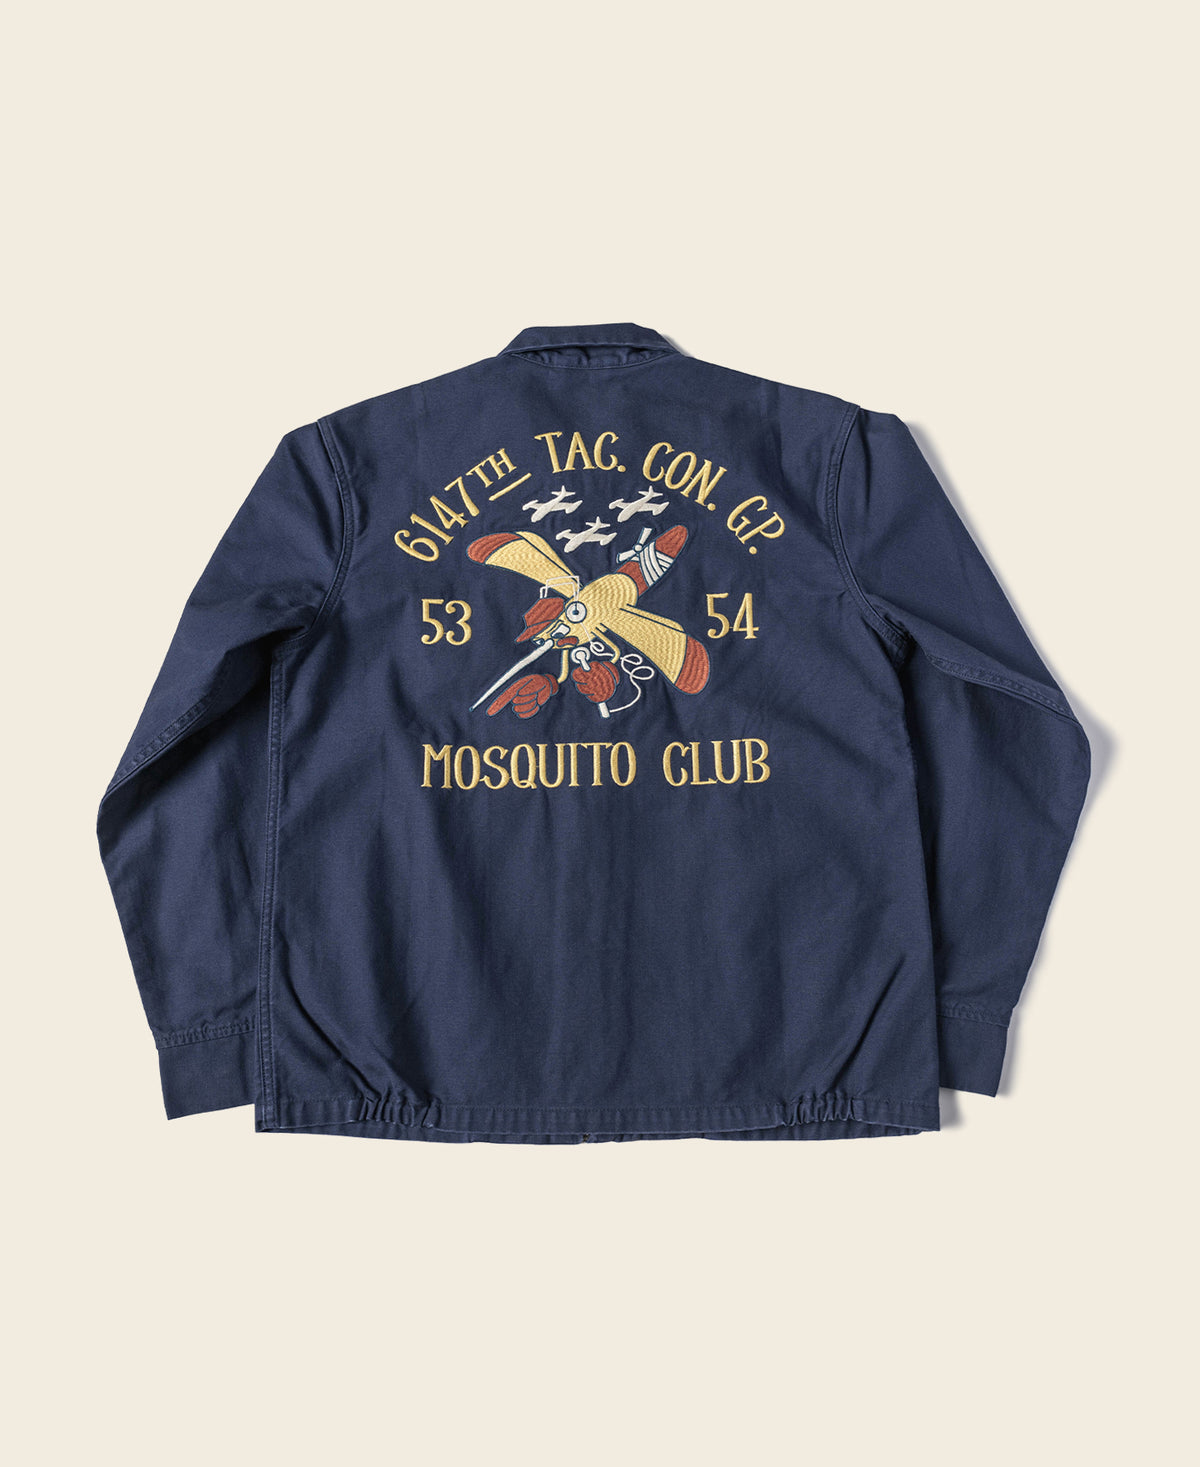 Korean War 6147th TAG. CON. GP. Mosquito Club Tour Jacket